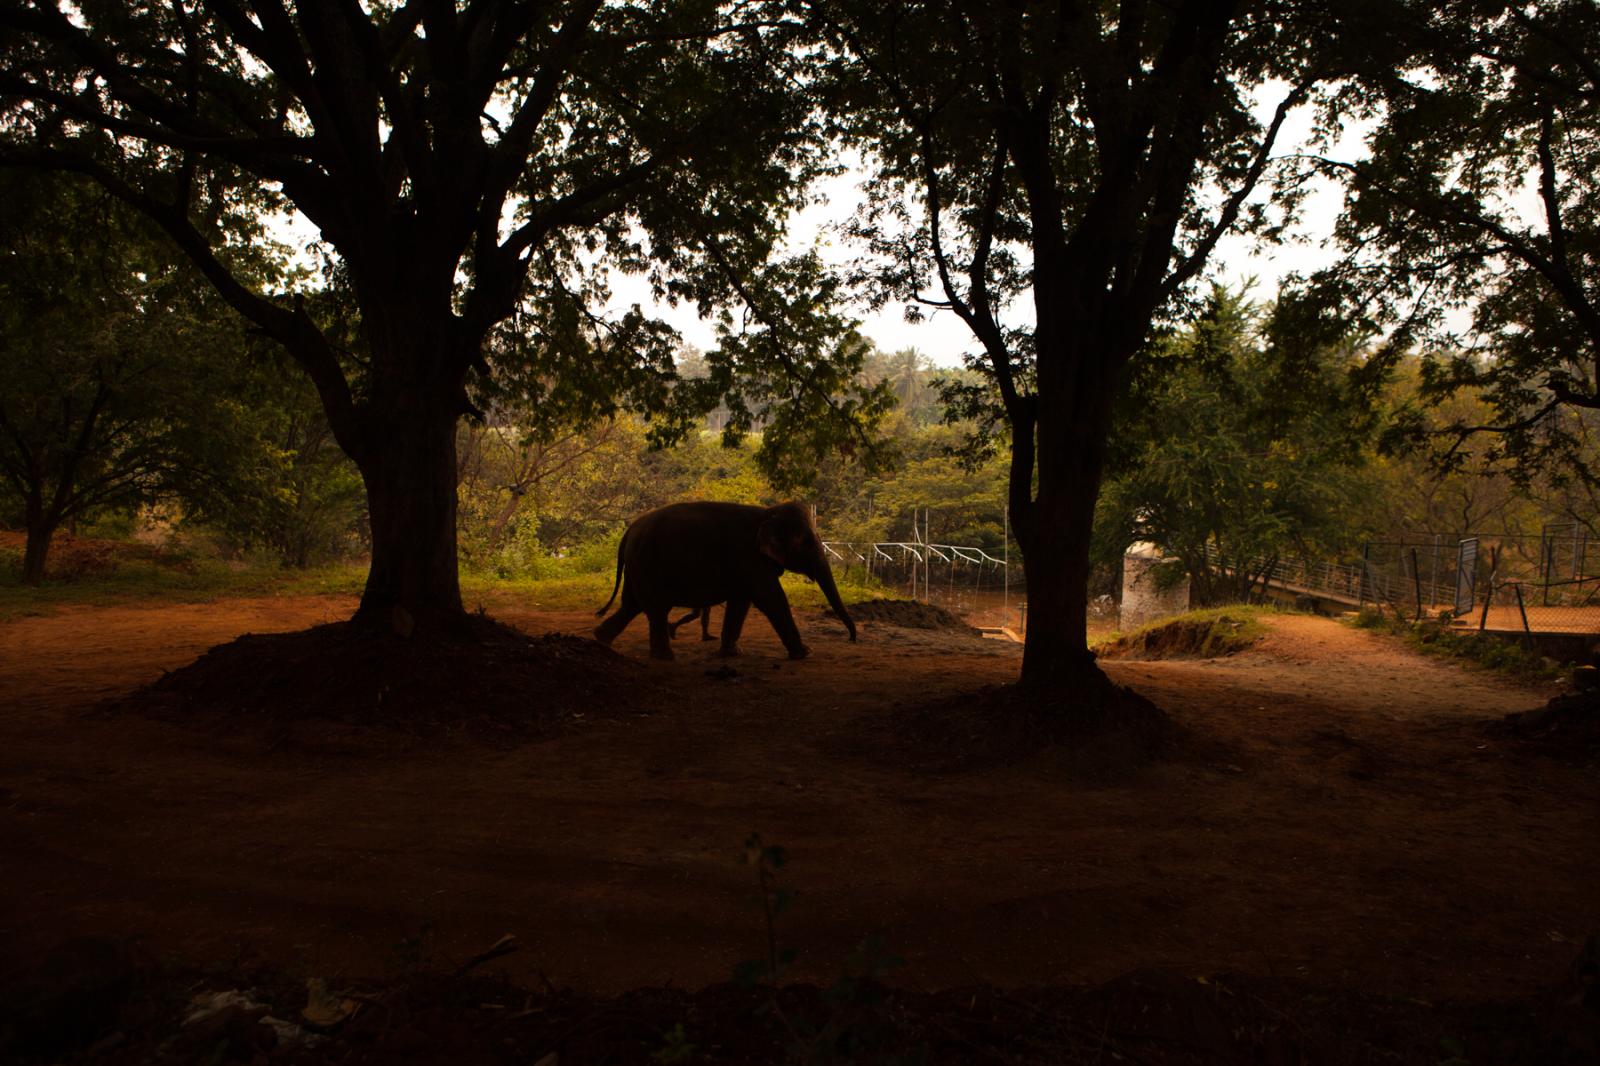 Temple elephant rejuvenation camp-DER SPIEGEL  - 